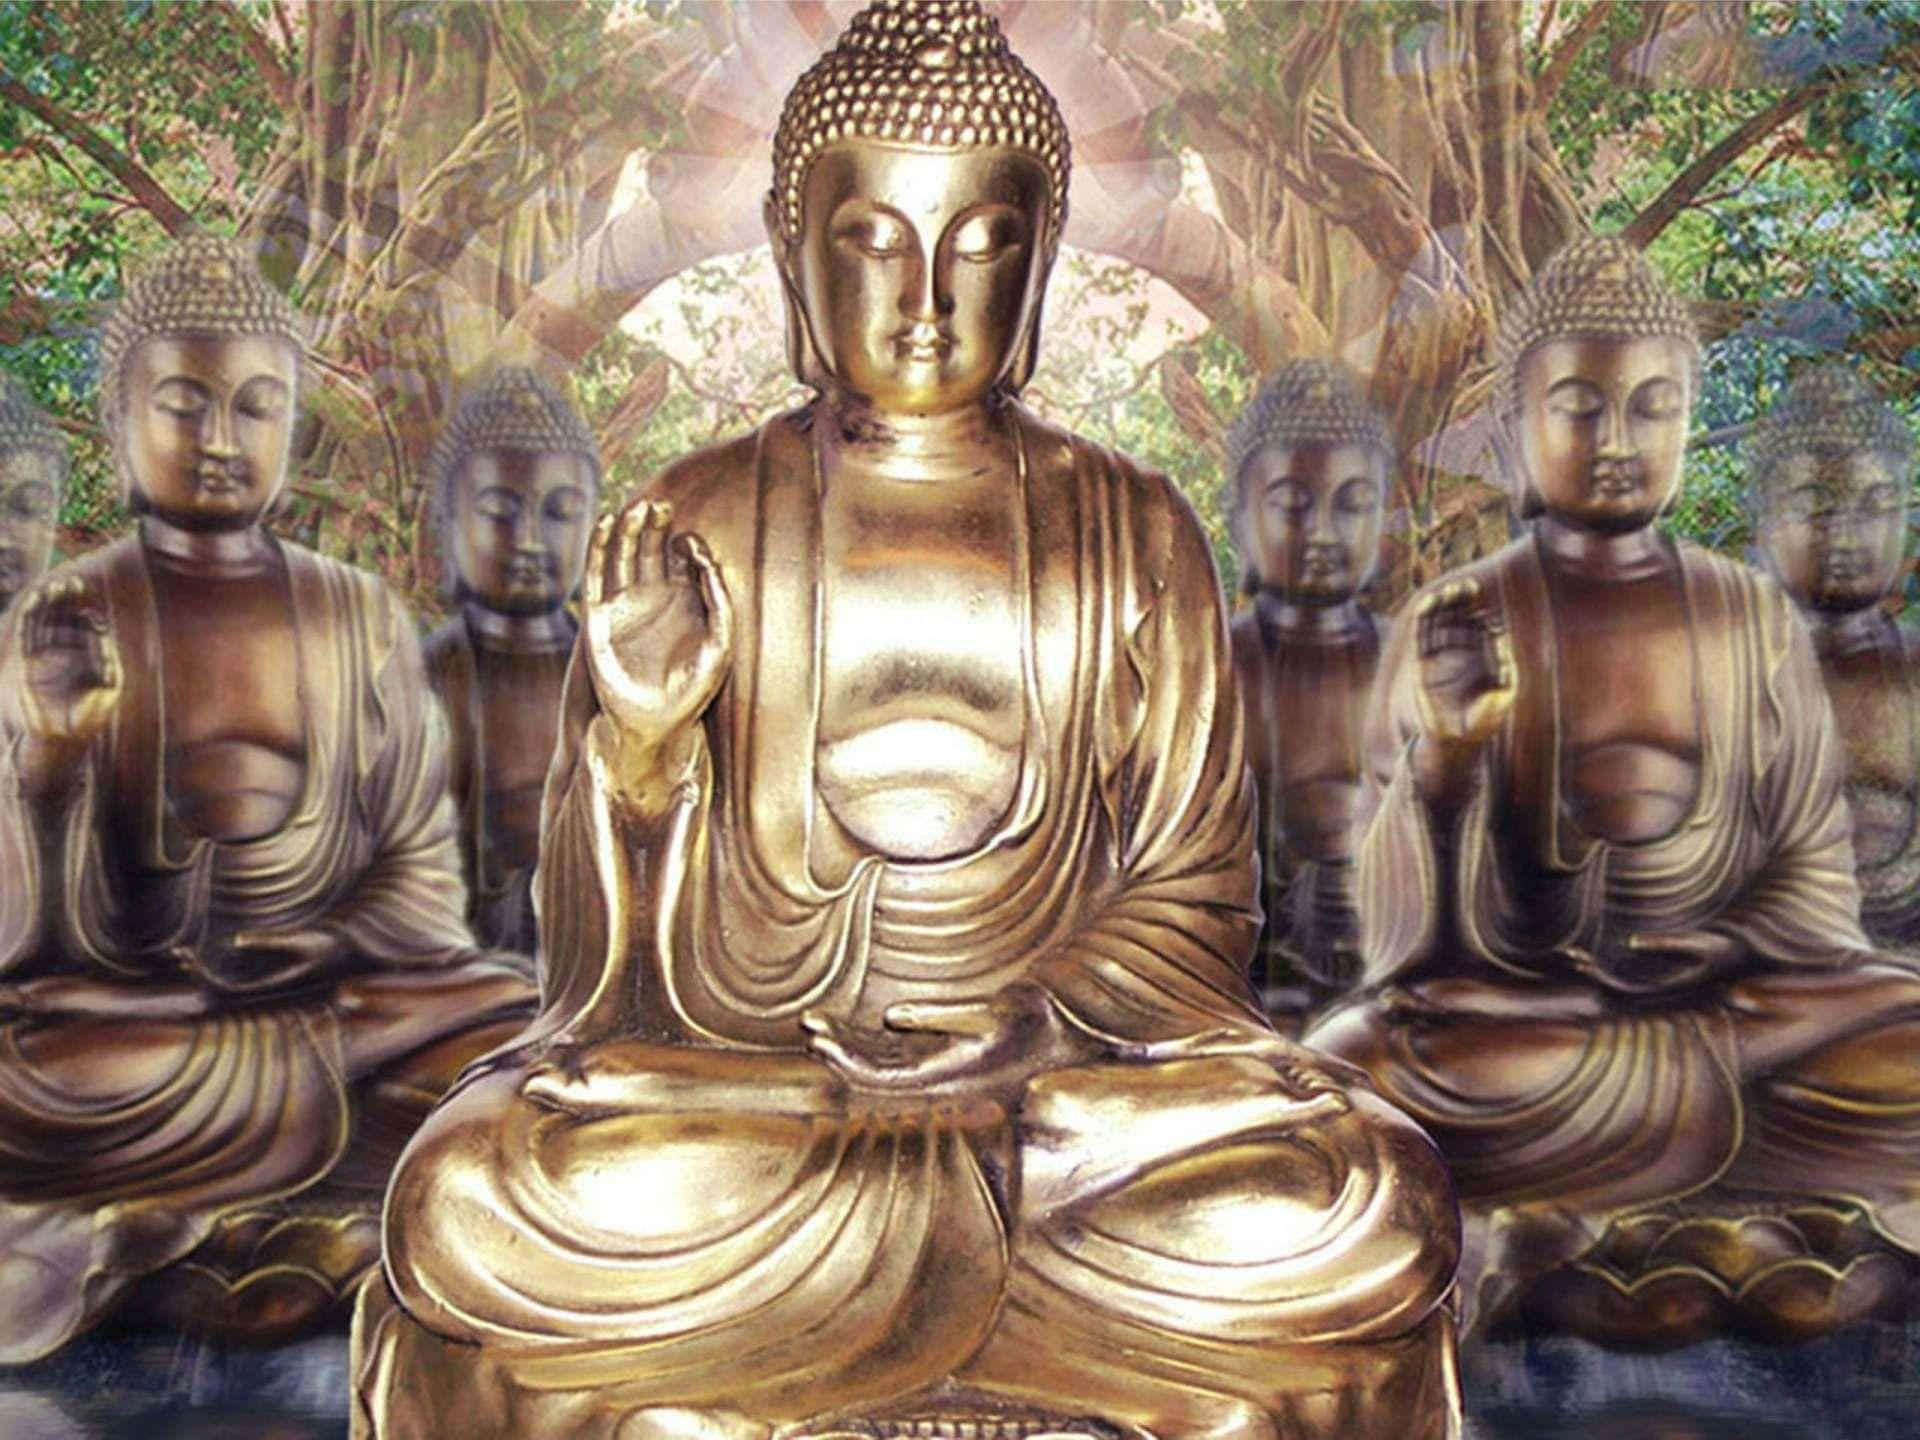 A beautiful painting of Gautama Buddha with radiant rays of light